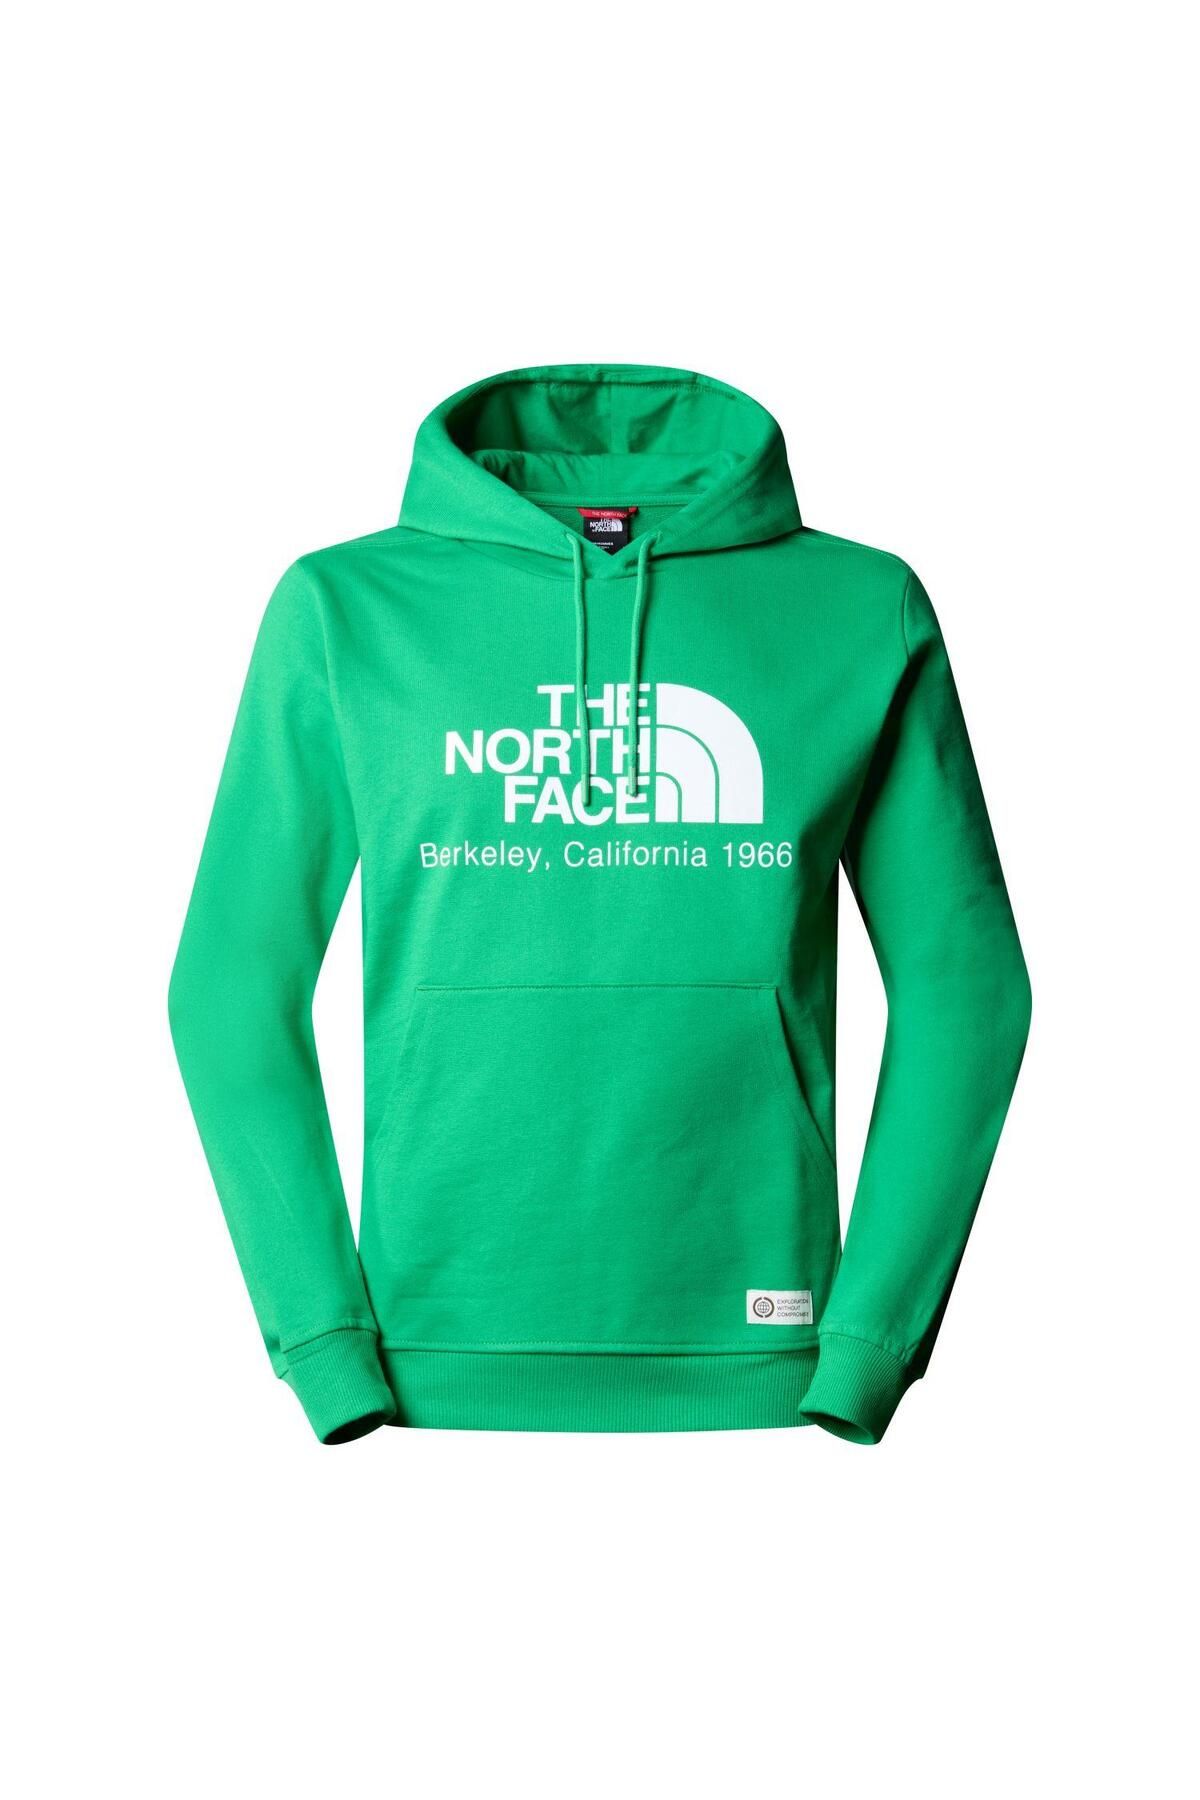 The North Face M BERKELEY CALIFORNIA HOODIE Erkek Sweat Shirt NF0A55GFPO81 Yeşil-S